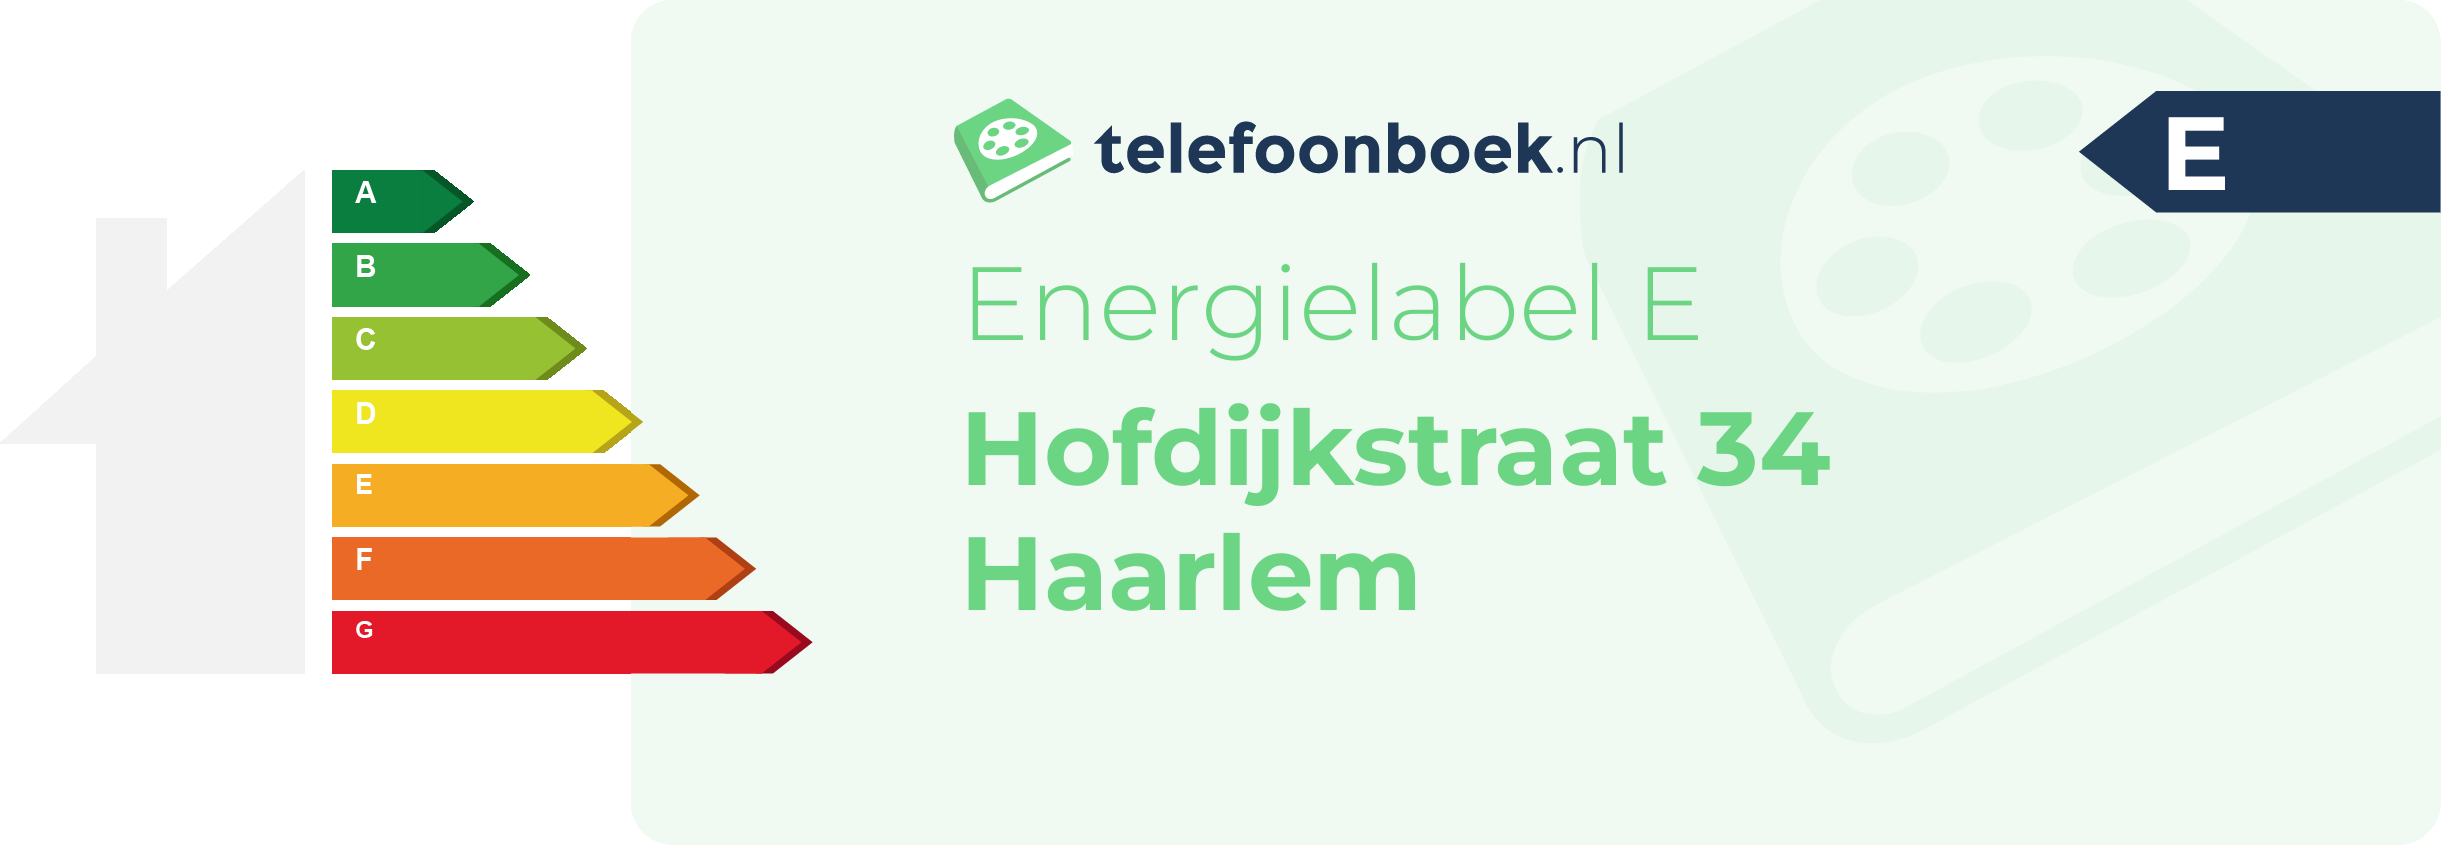 Energielabel Hofdijkstraat 34 Haarlem